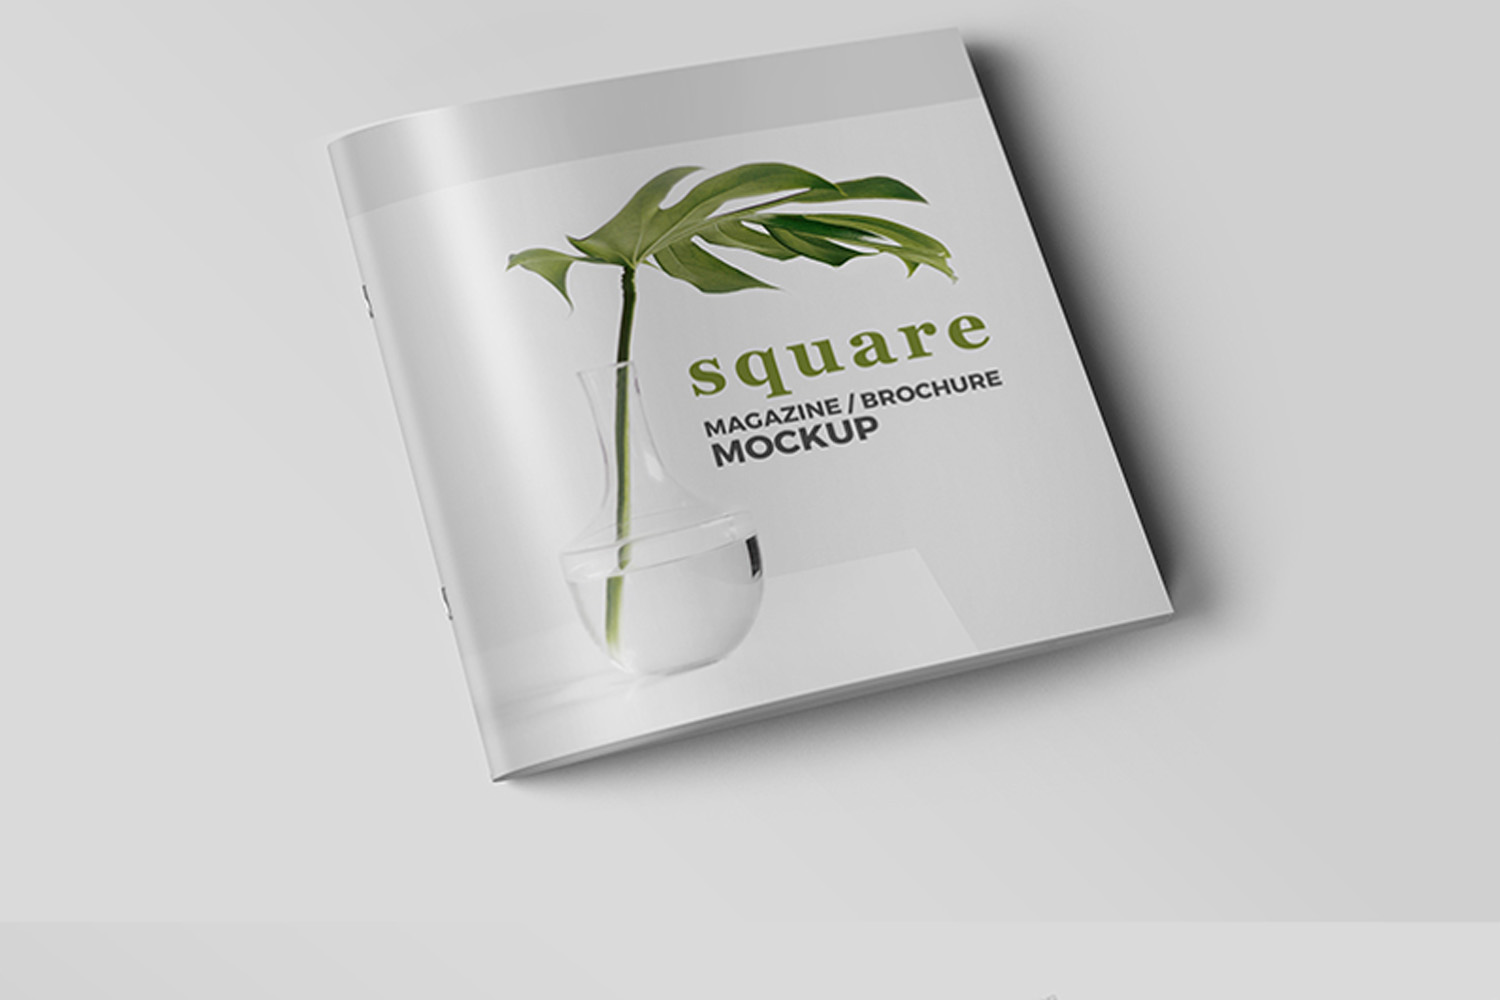 Square Magazine Brochure Mockup Free Download